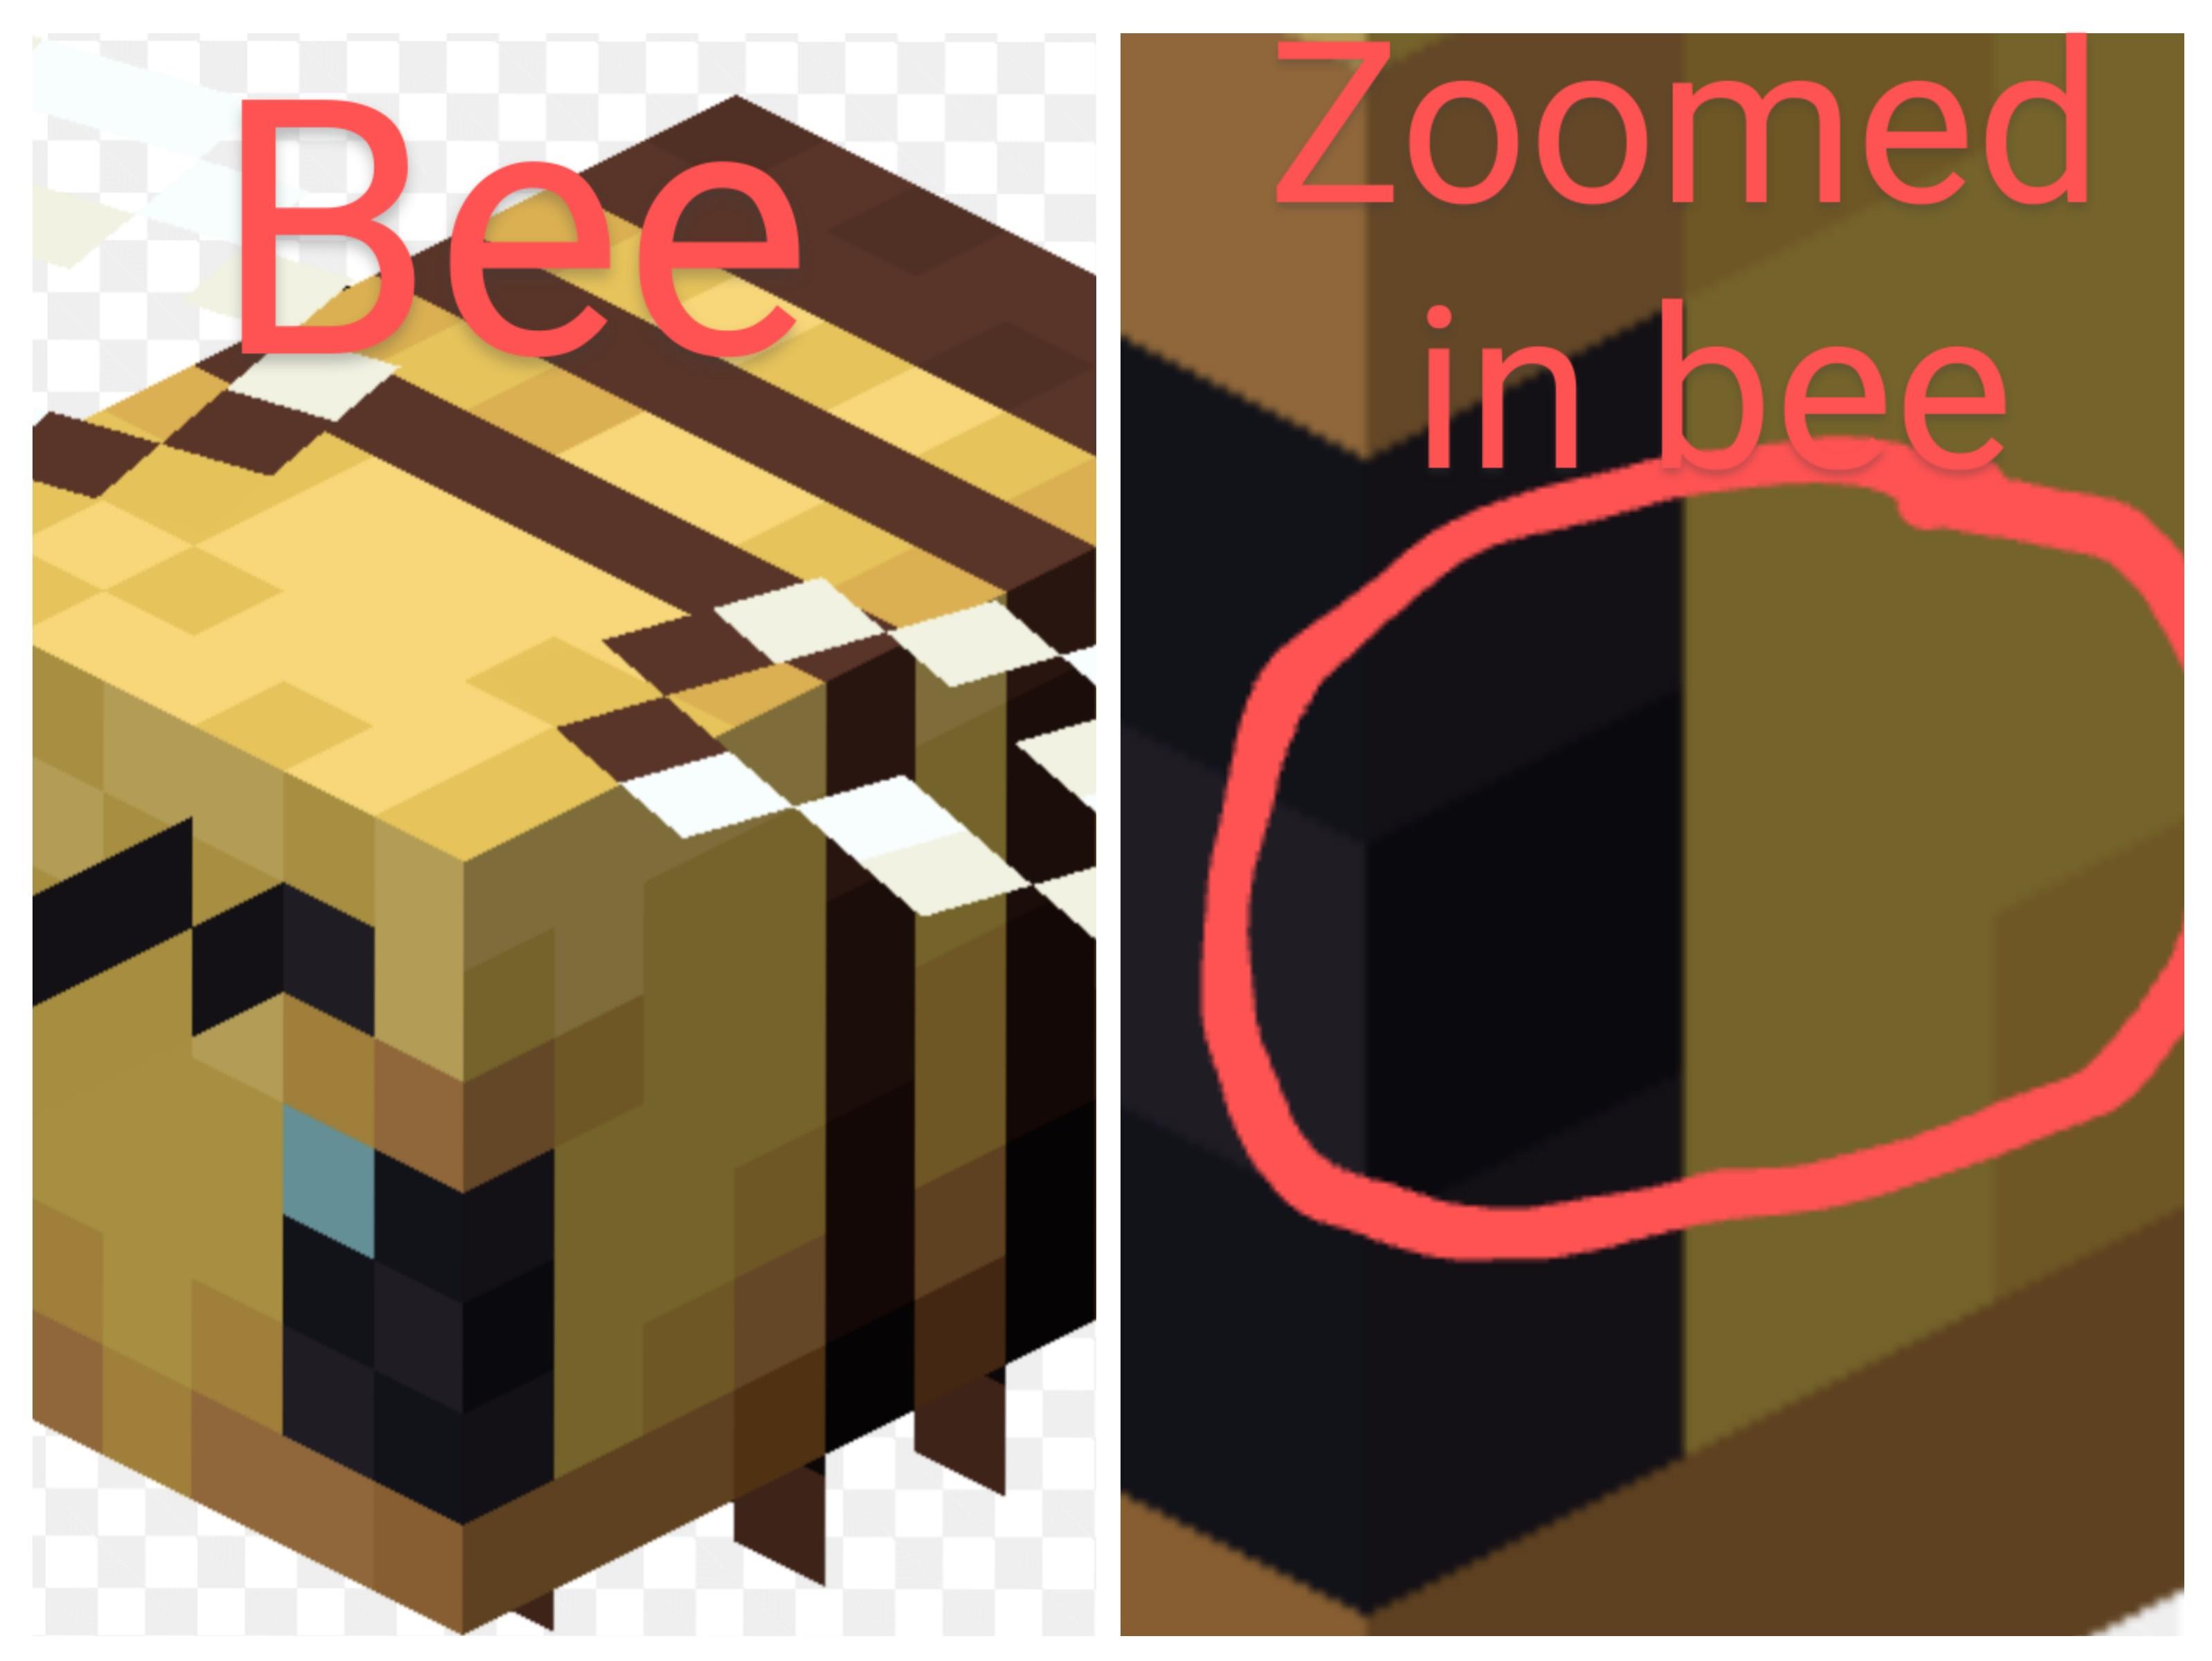 Minecraft Memes - "Bee-zoomed Firefly"